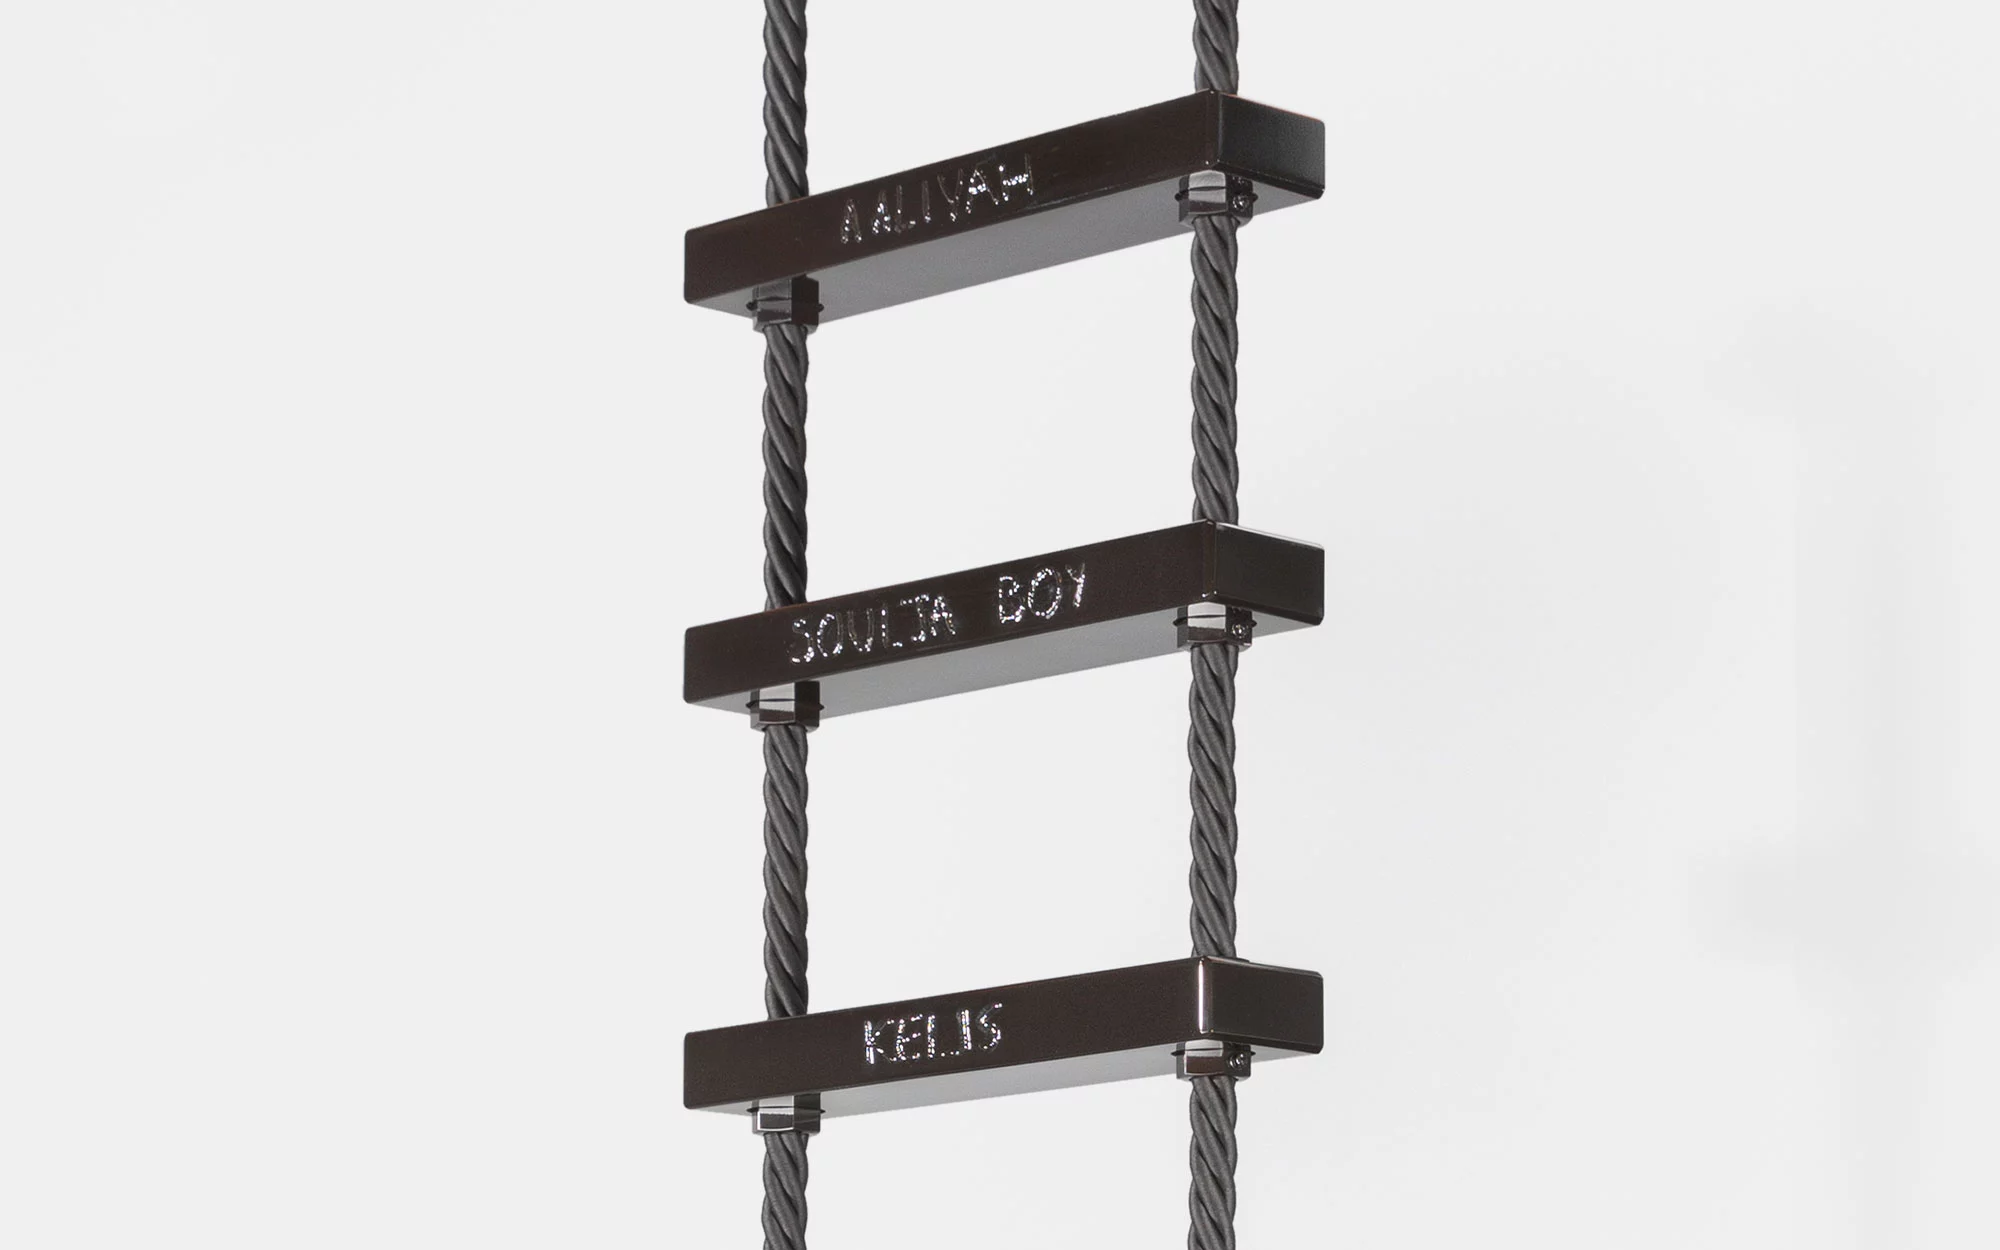 “WORLD LEADERS“ Ladder Special Commission - Virgil Abloh - Bench - Galerie kreo